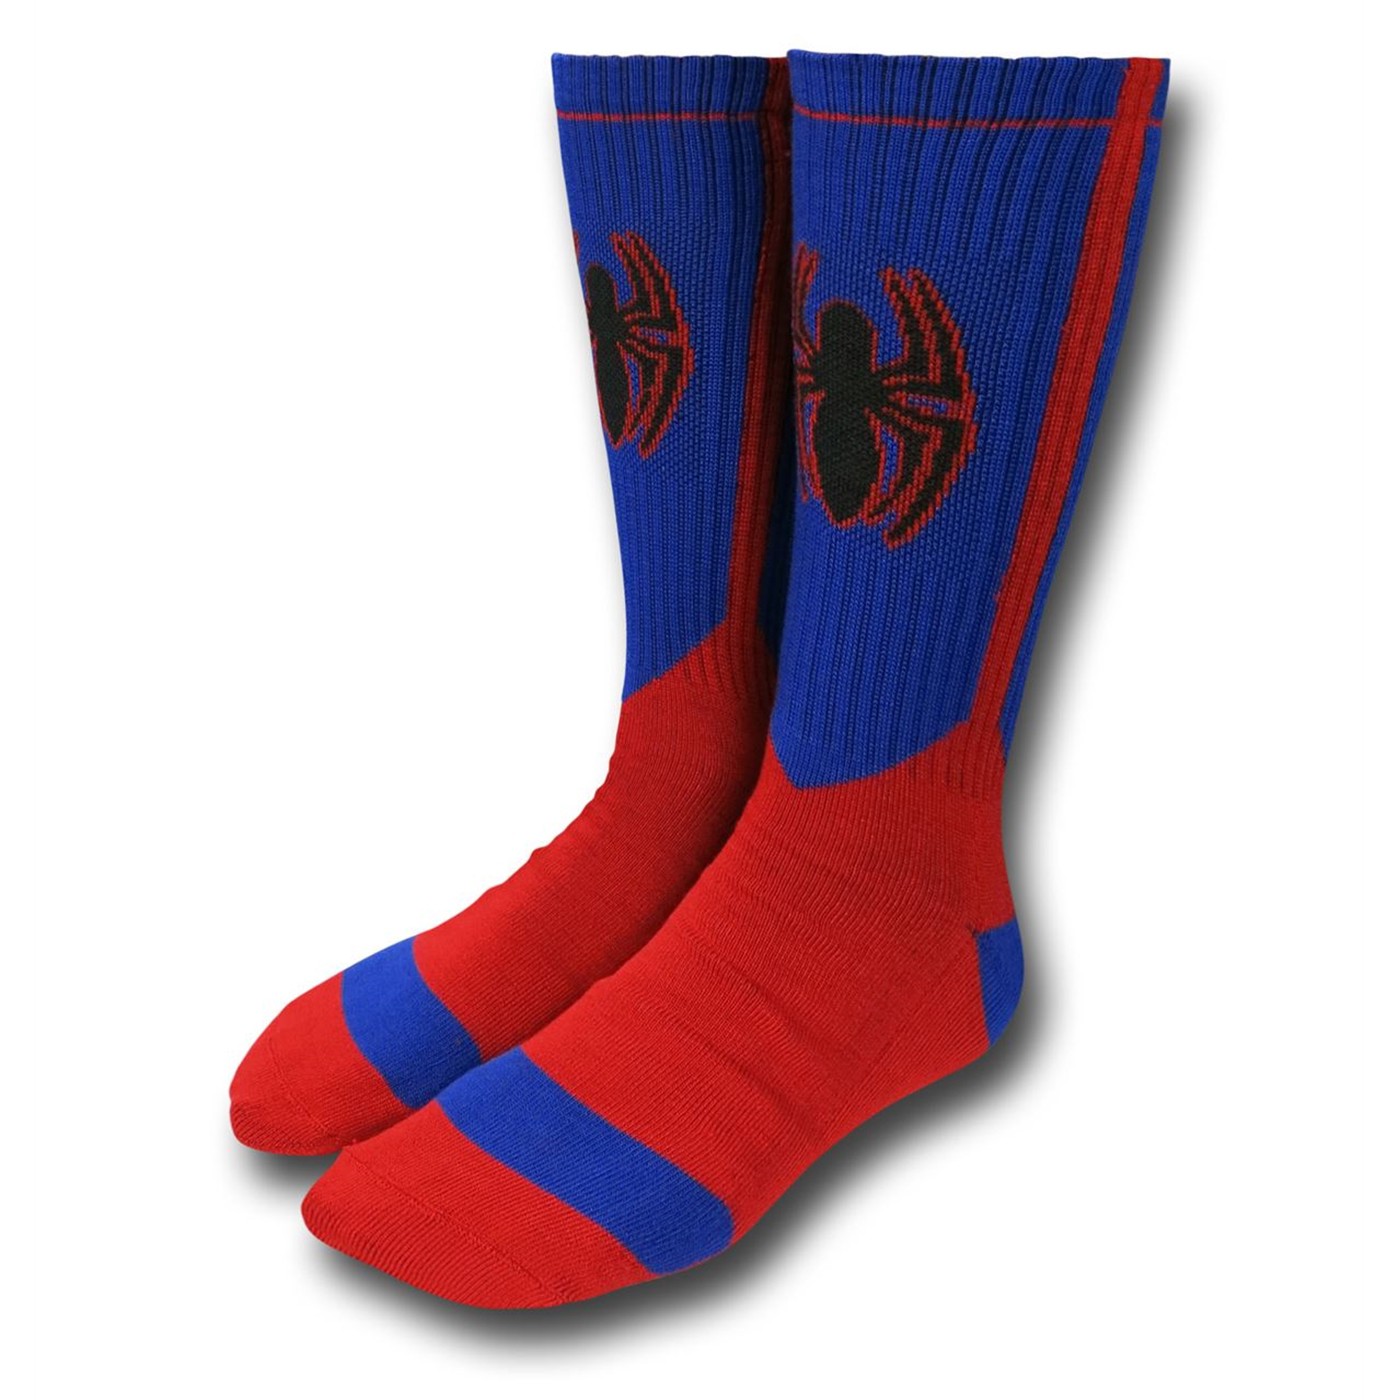 Spiderman Black Red and Blue Socks 2-Pack